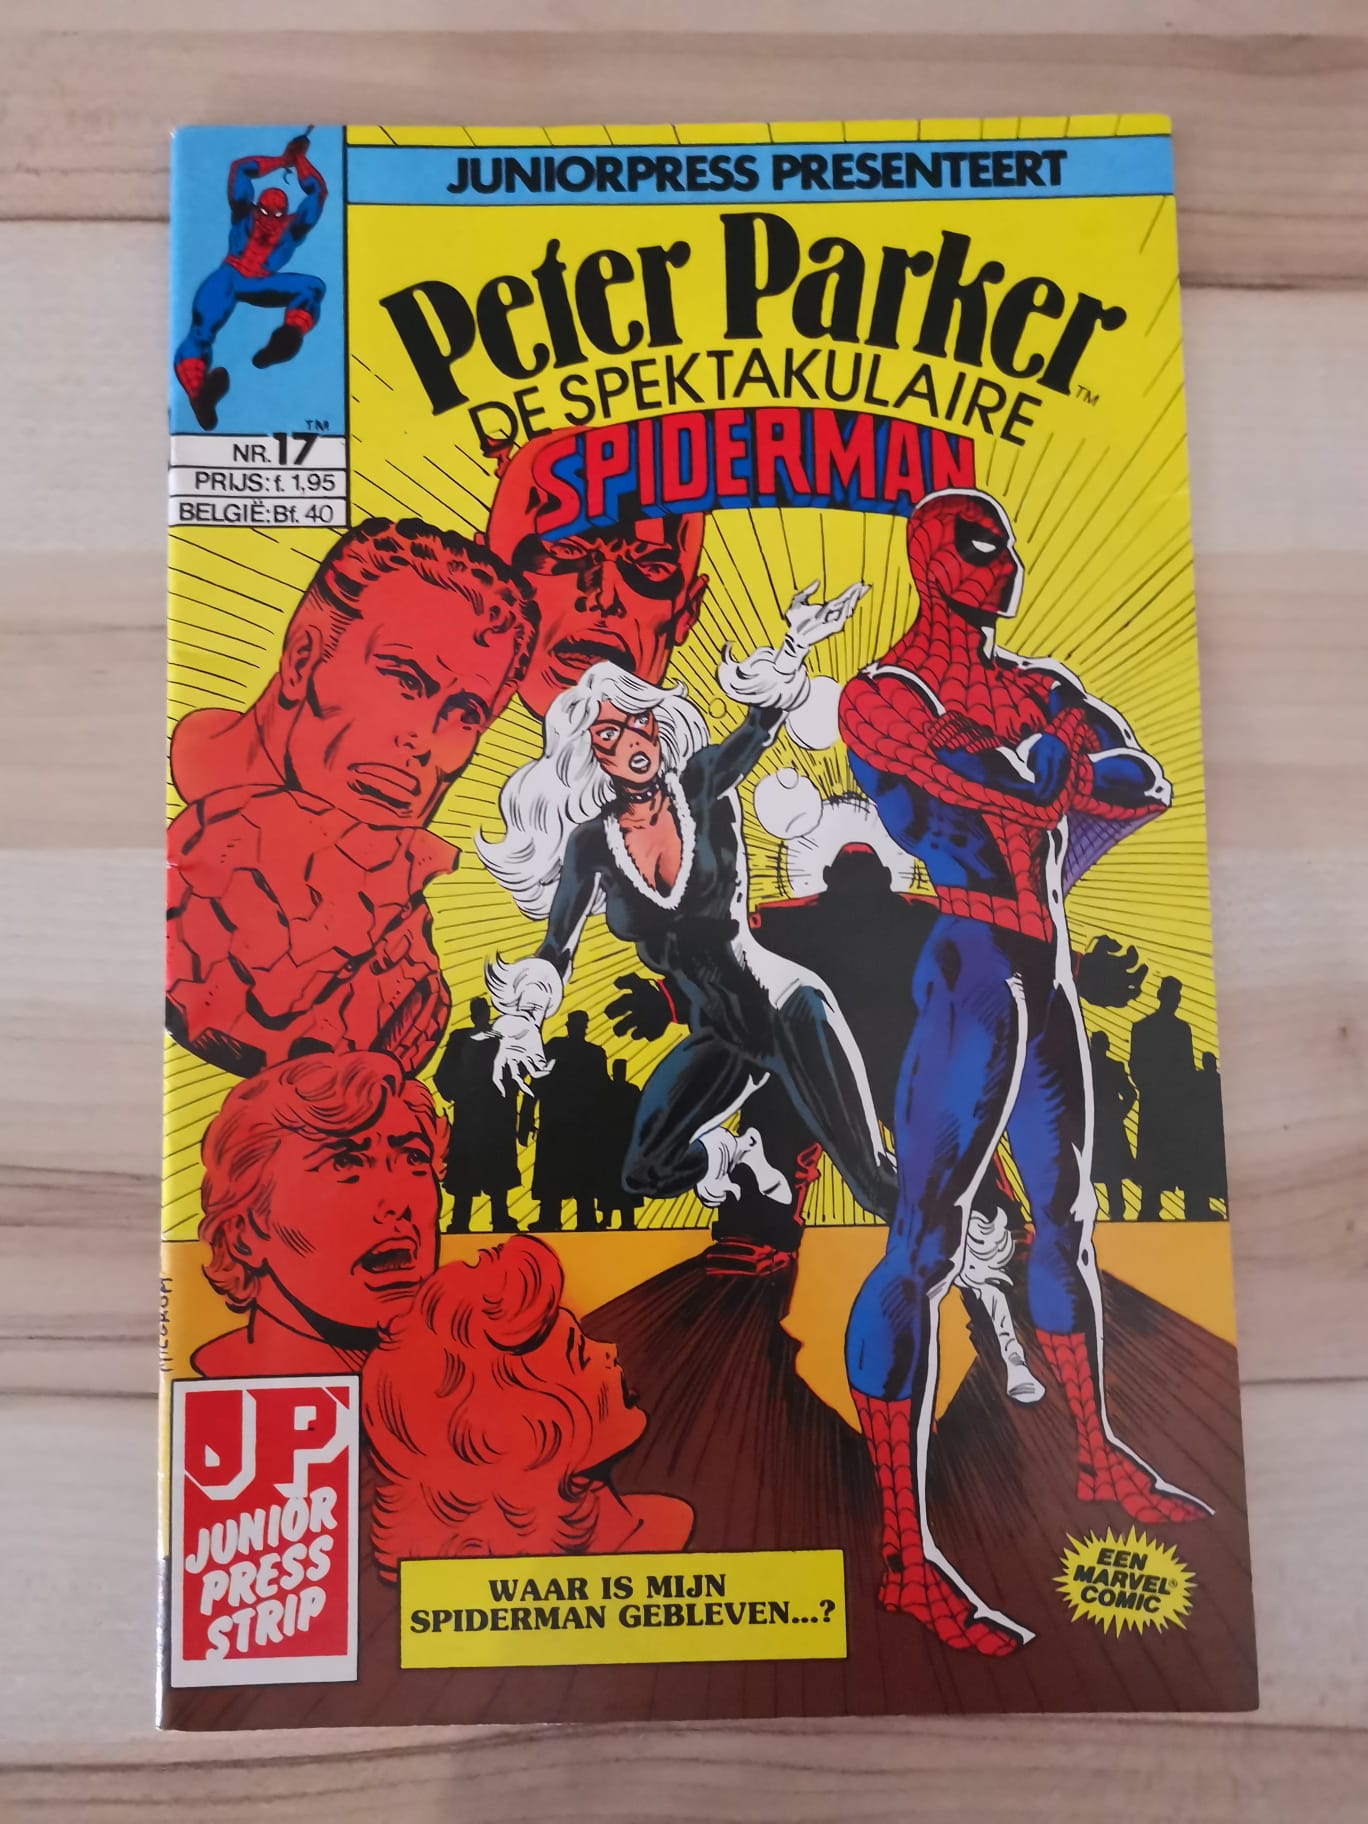 Peter Parker De spektakulaire spiderman #17